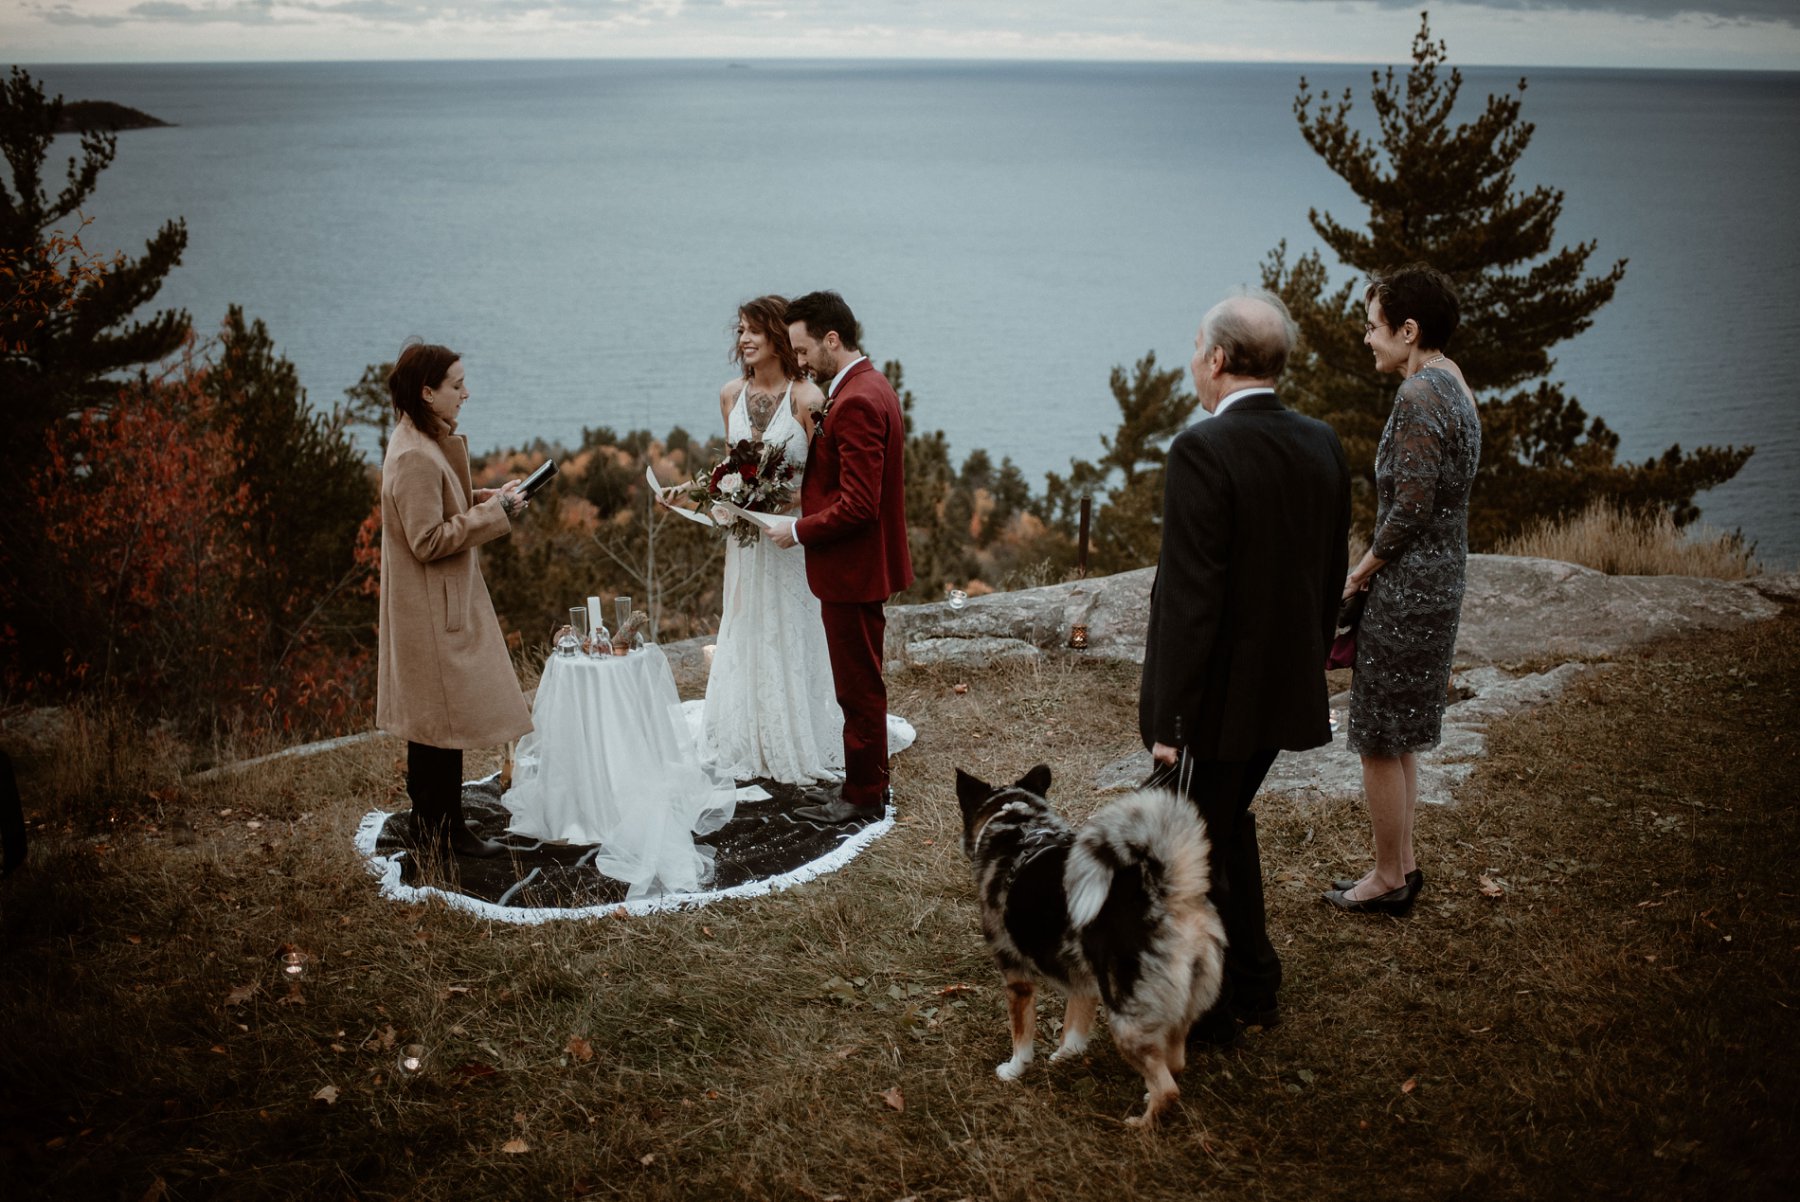 Sugarloaf mountain elopement wedding in Michigan.